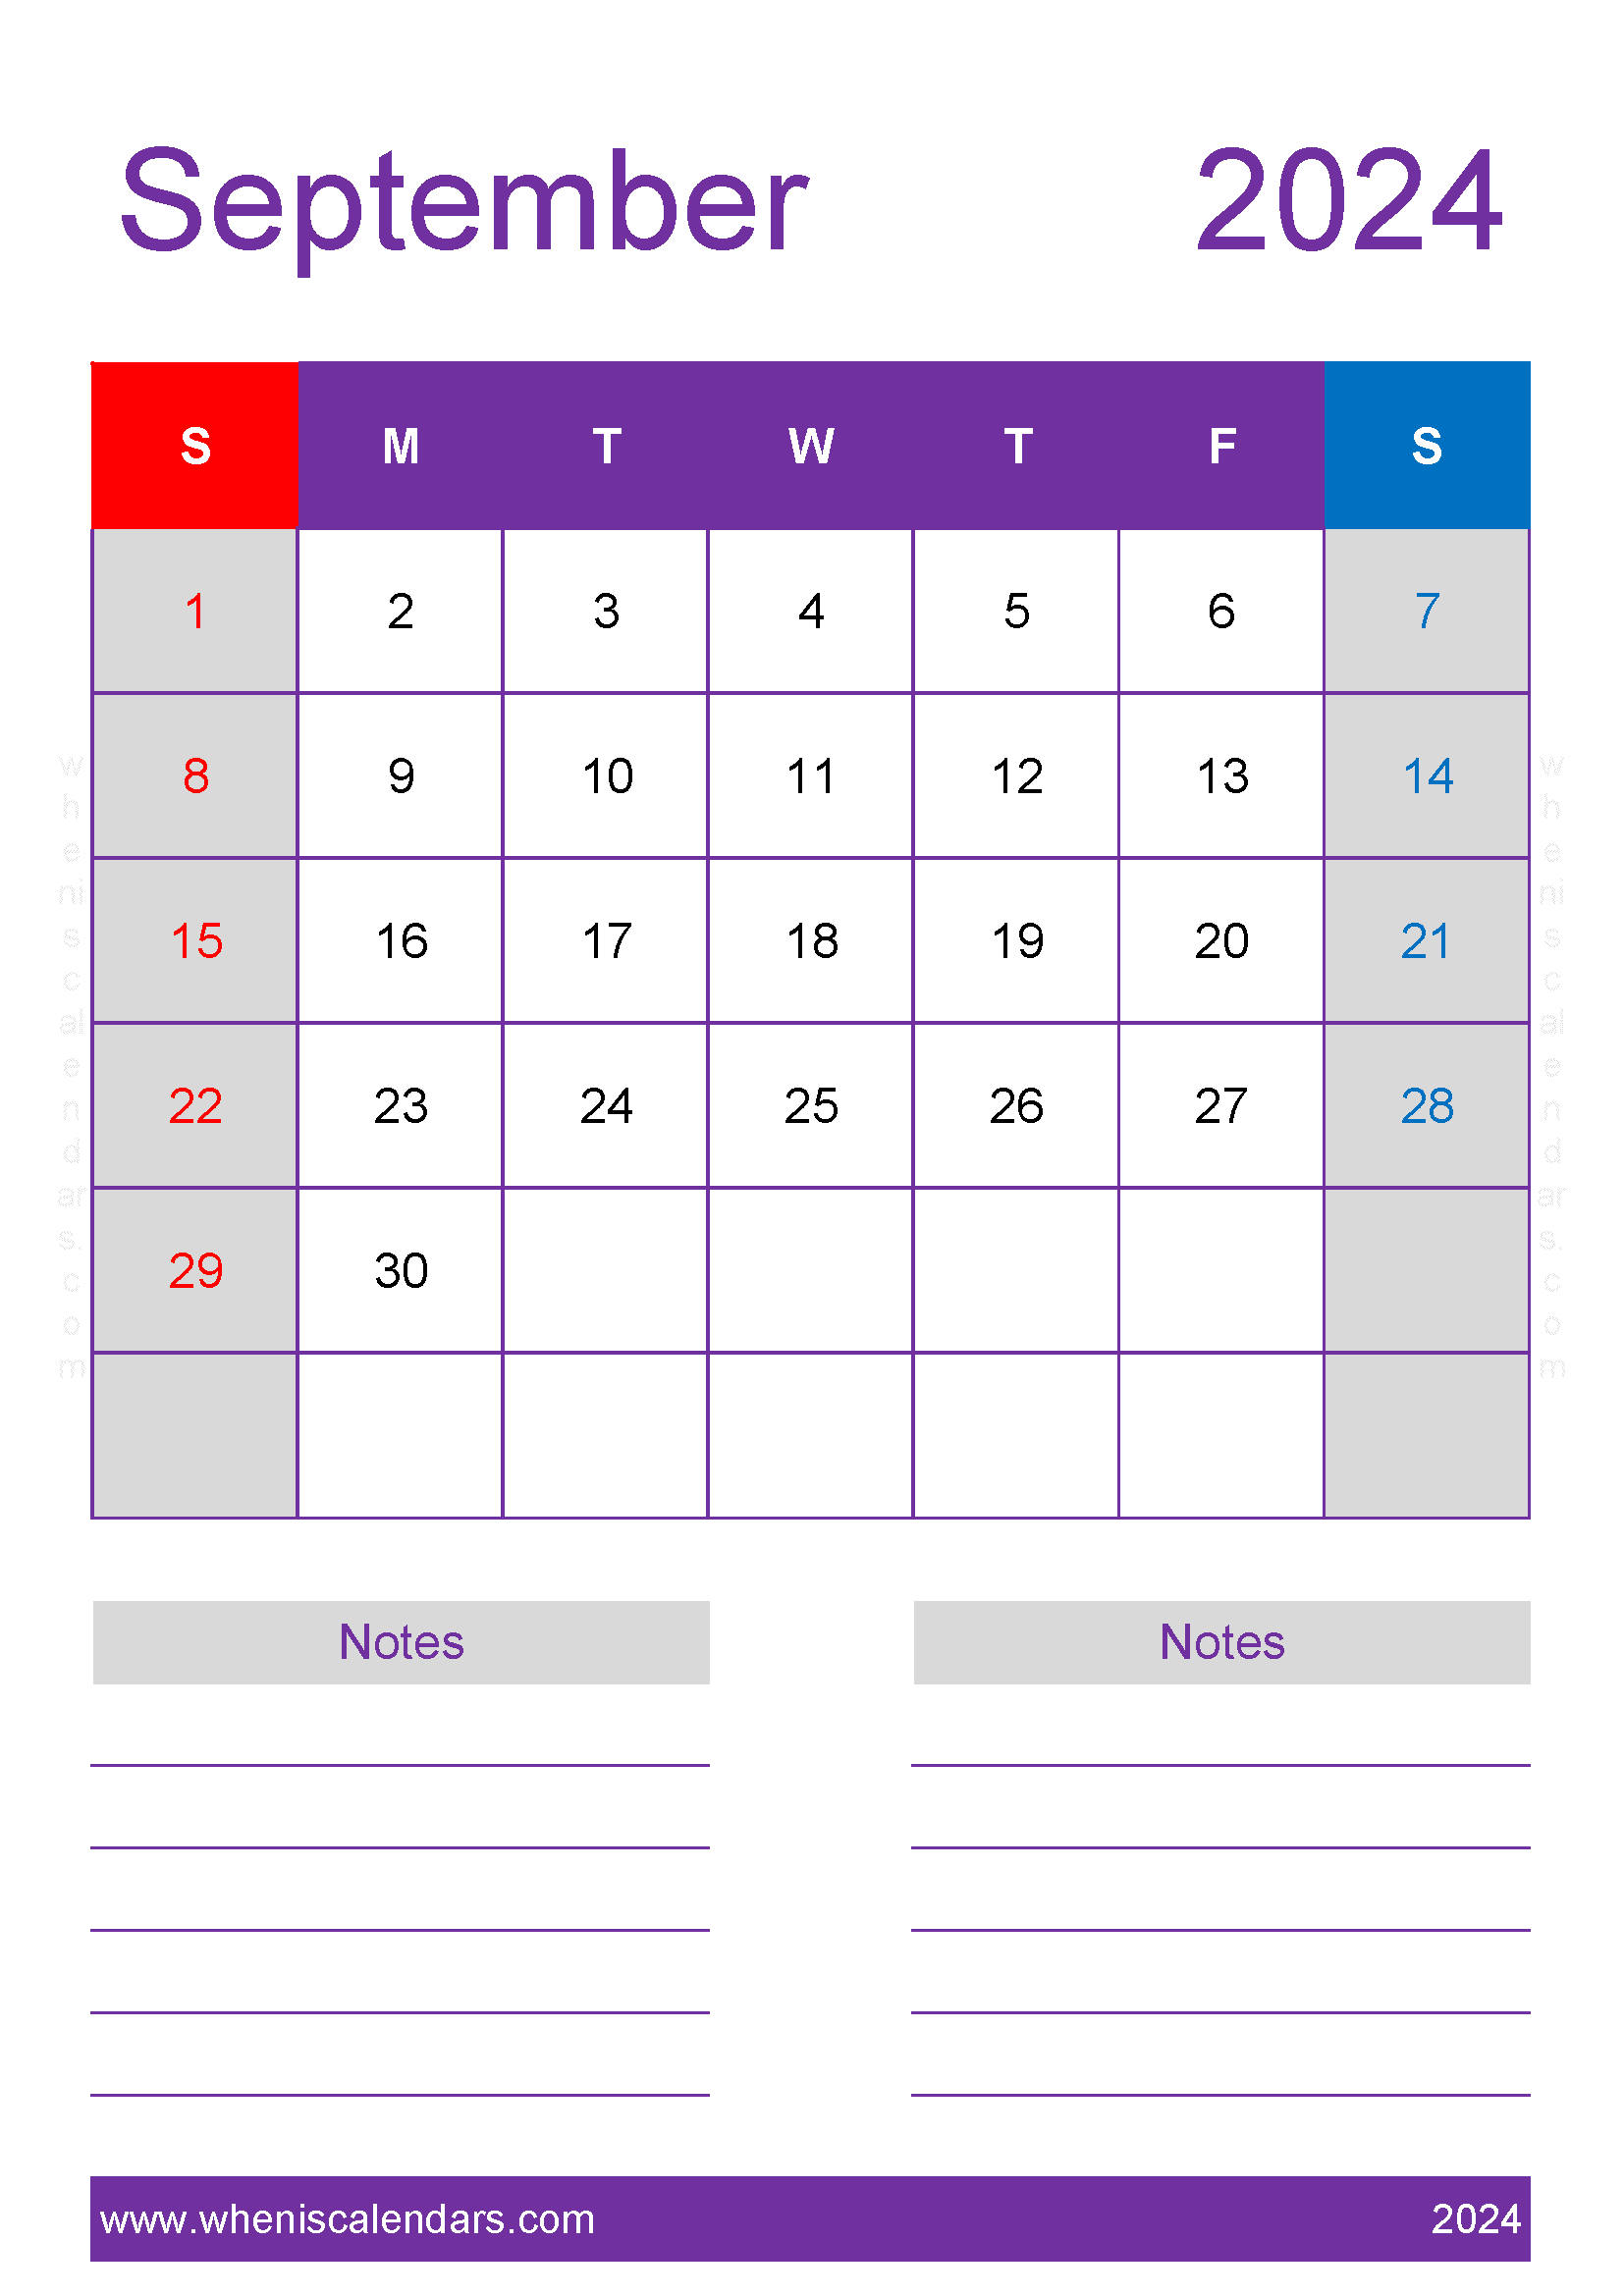 September 2024 Calendar large print Monthly Calendar